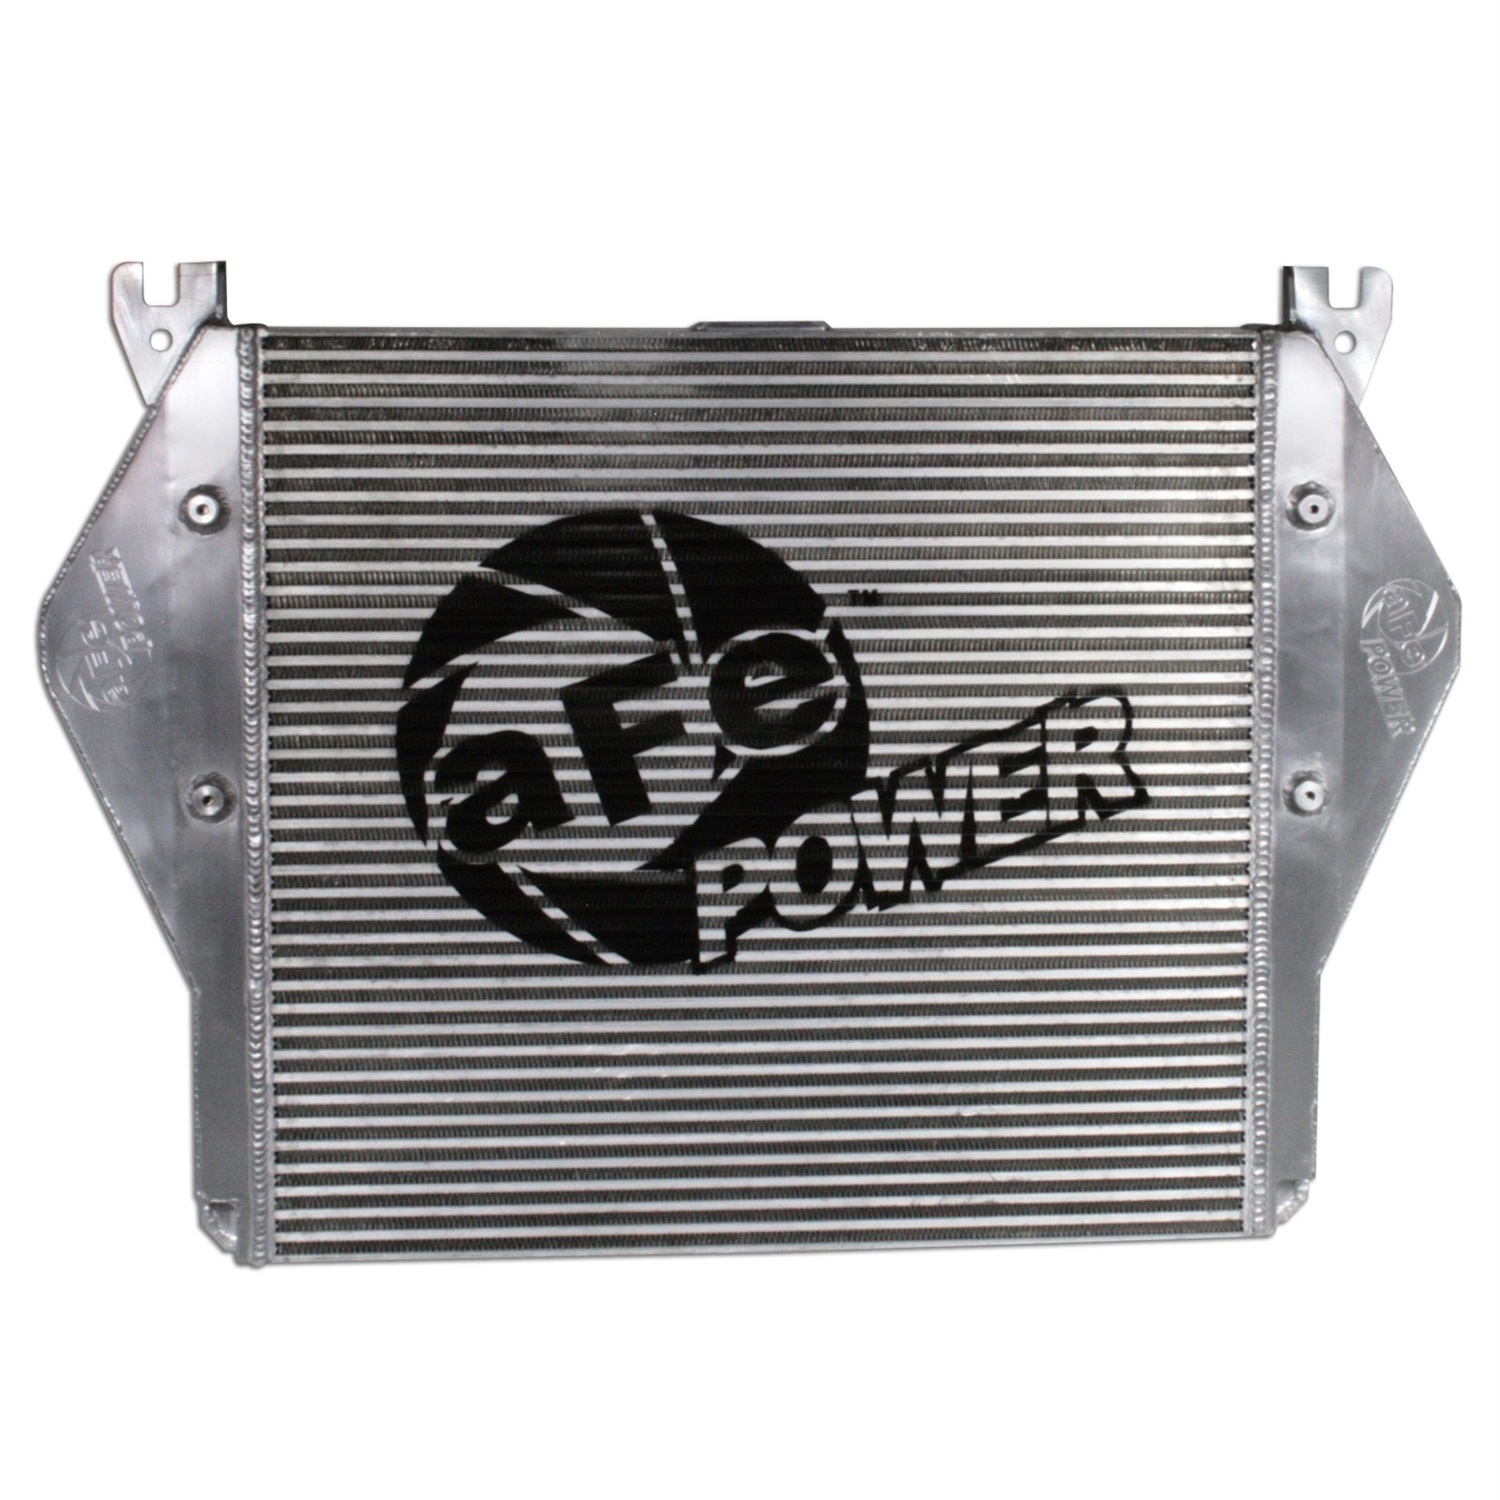 aFe Power aFe Power 46-20011 Bladerunner Intercooler Fits 03-07 Ram 2500 Ram 3500